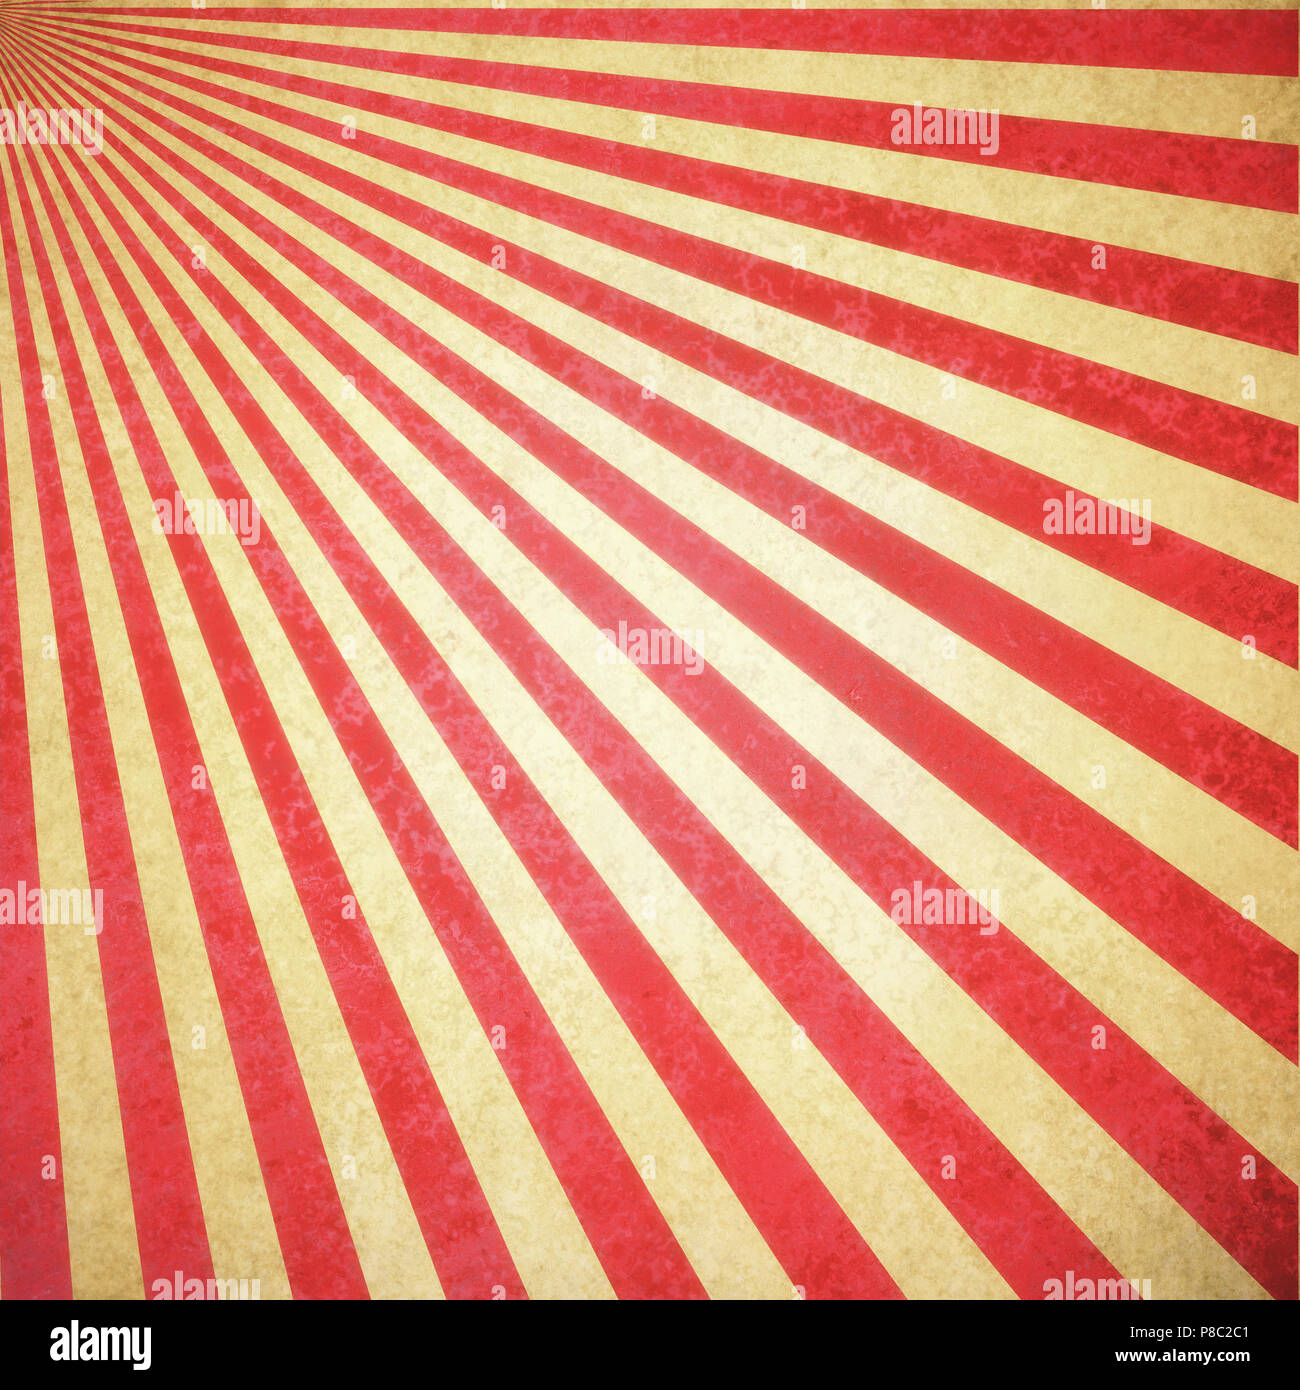 Oro rojo sunburst fondo abstracto, estilo vintage retro sunbeam o rayas en diagonal diseño con textura Foto de stock